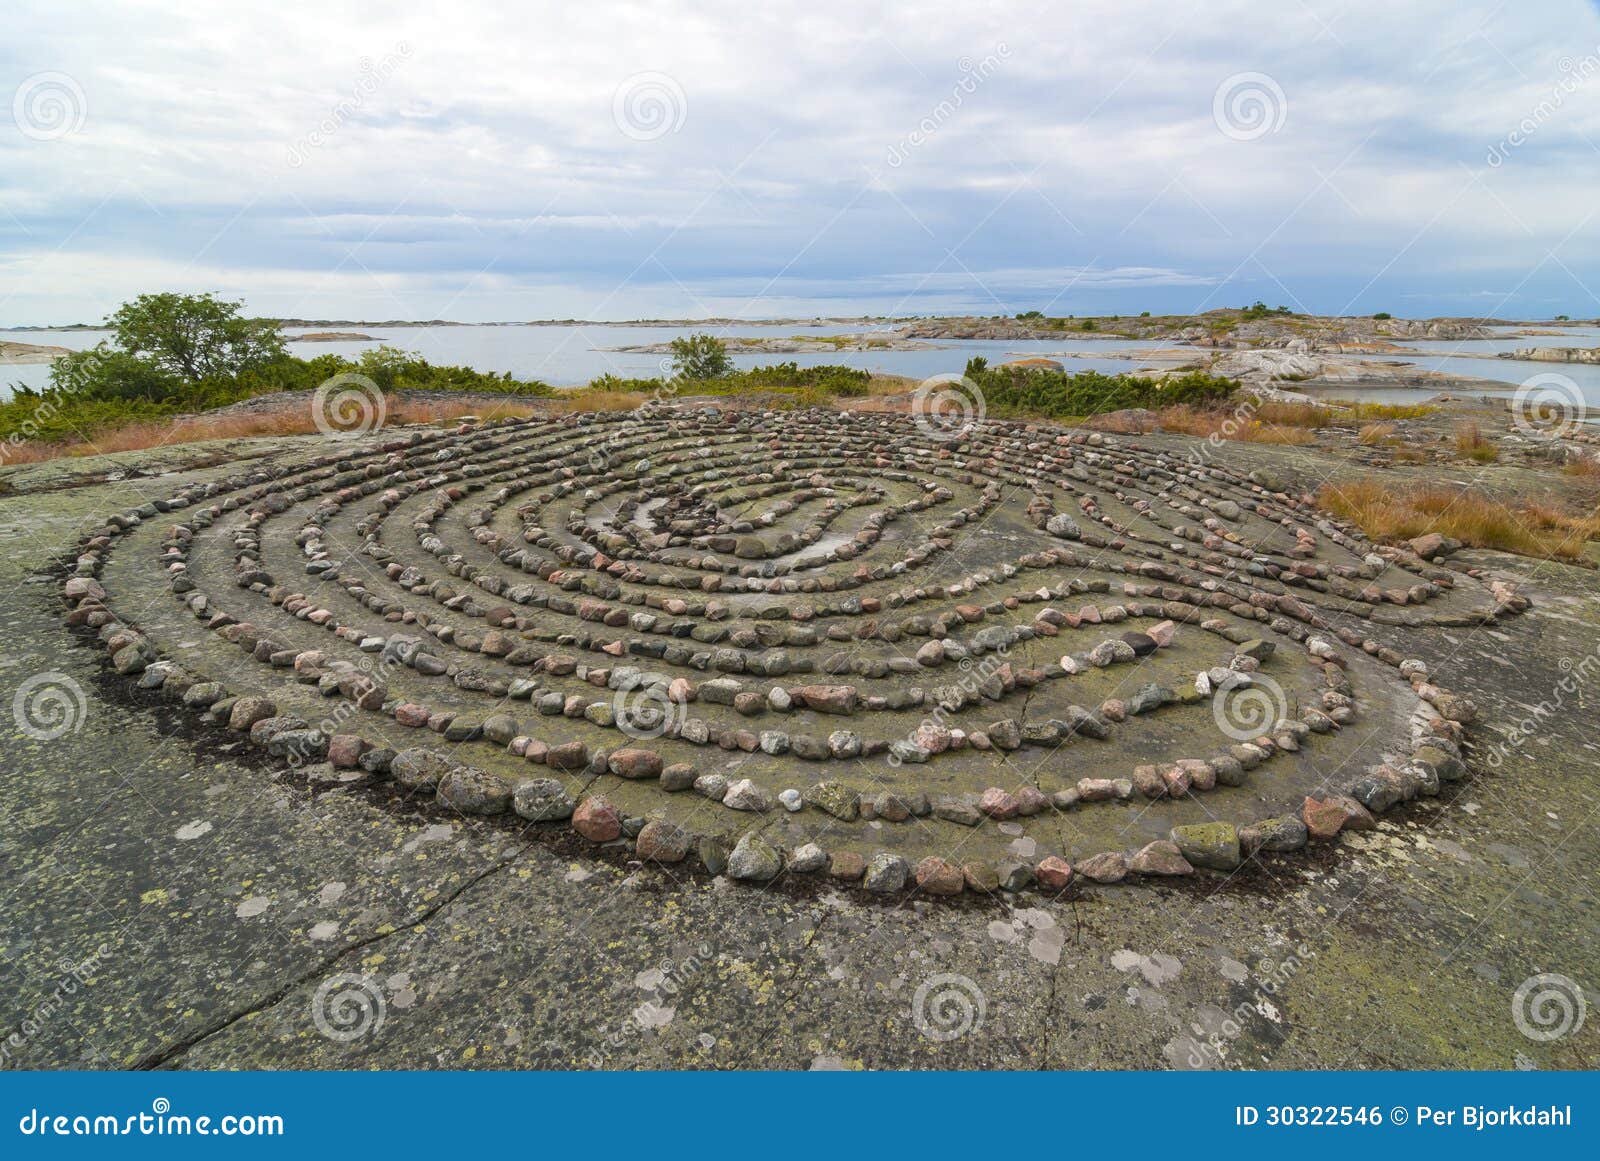 large stone labyrinth fredlarna archipelago